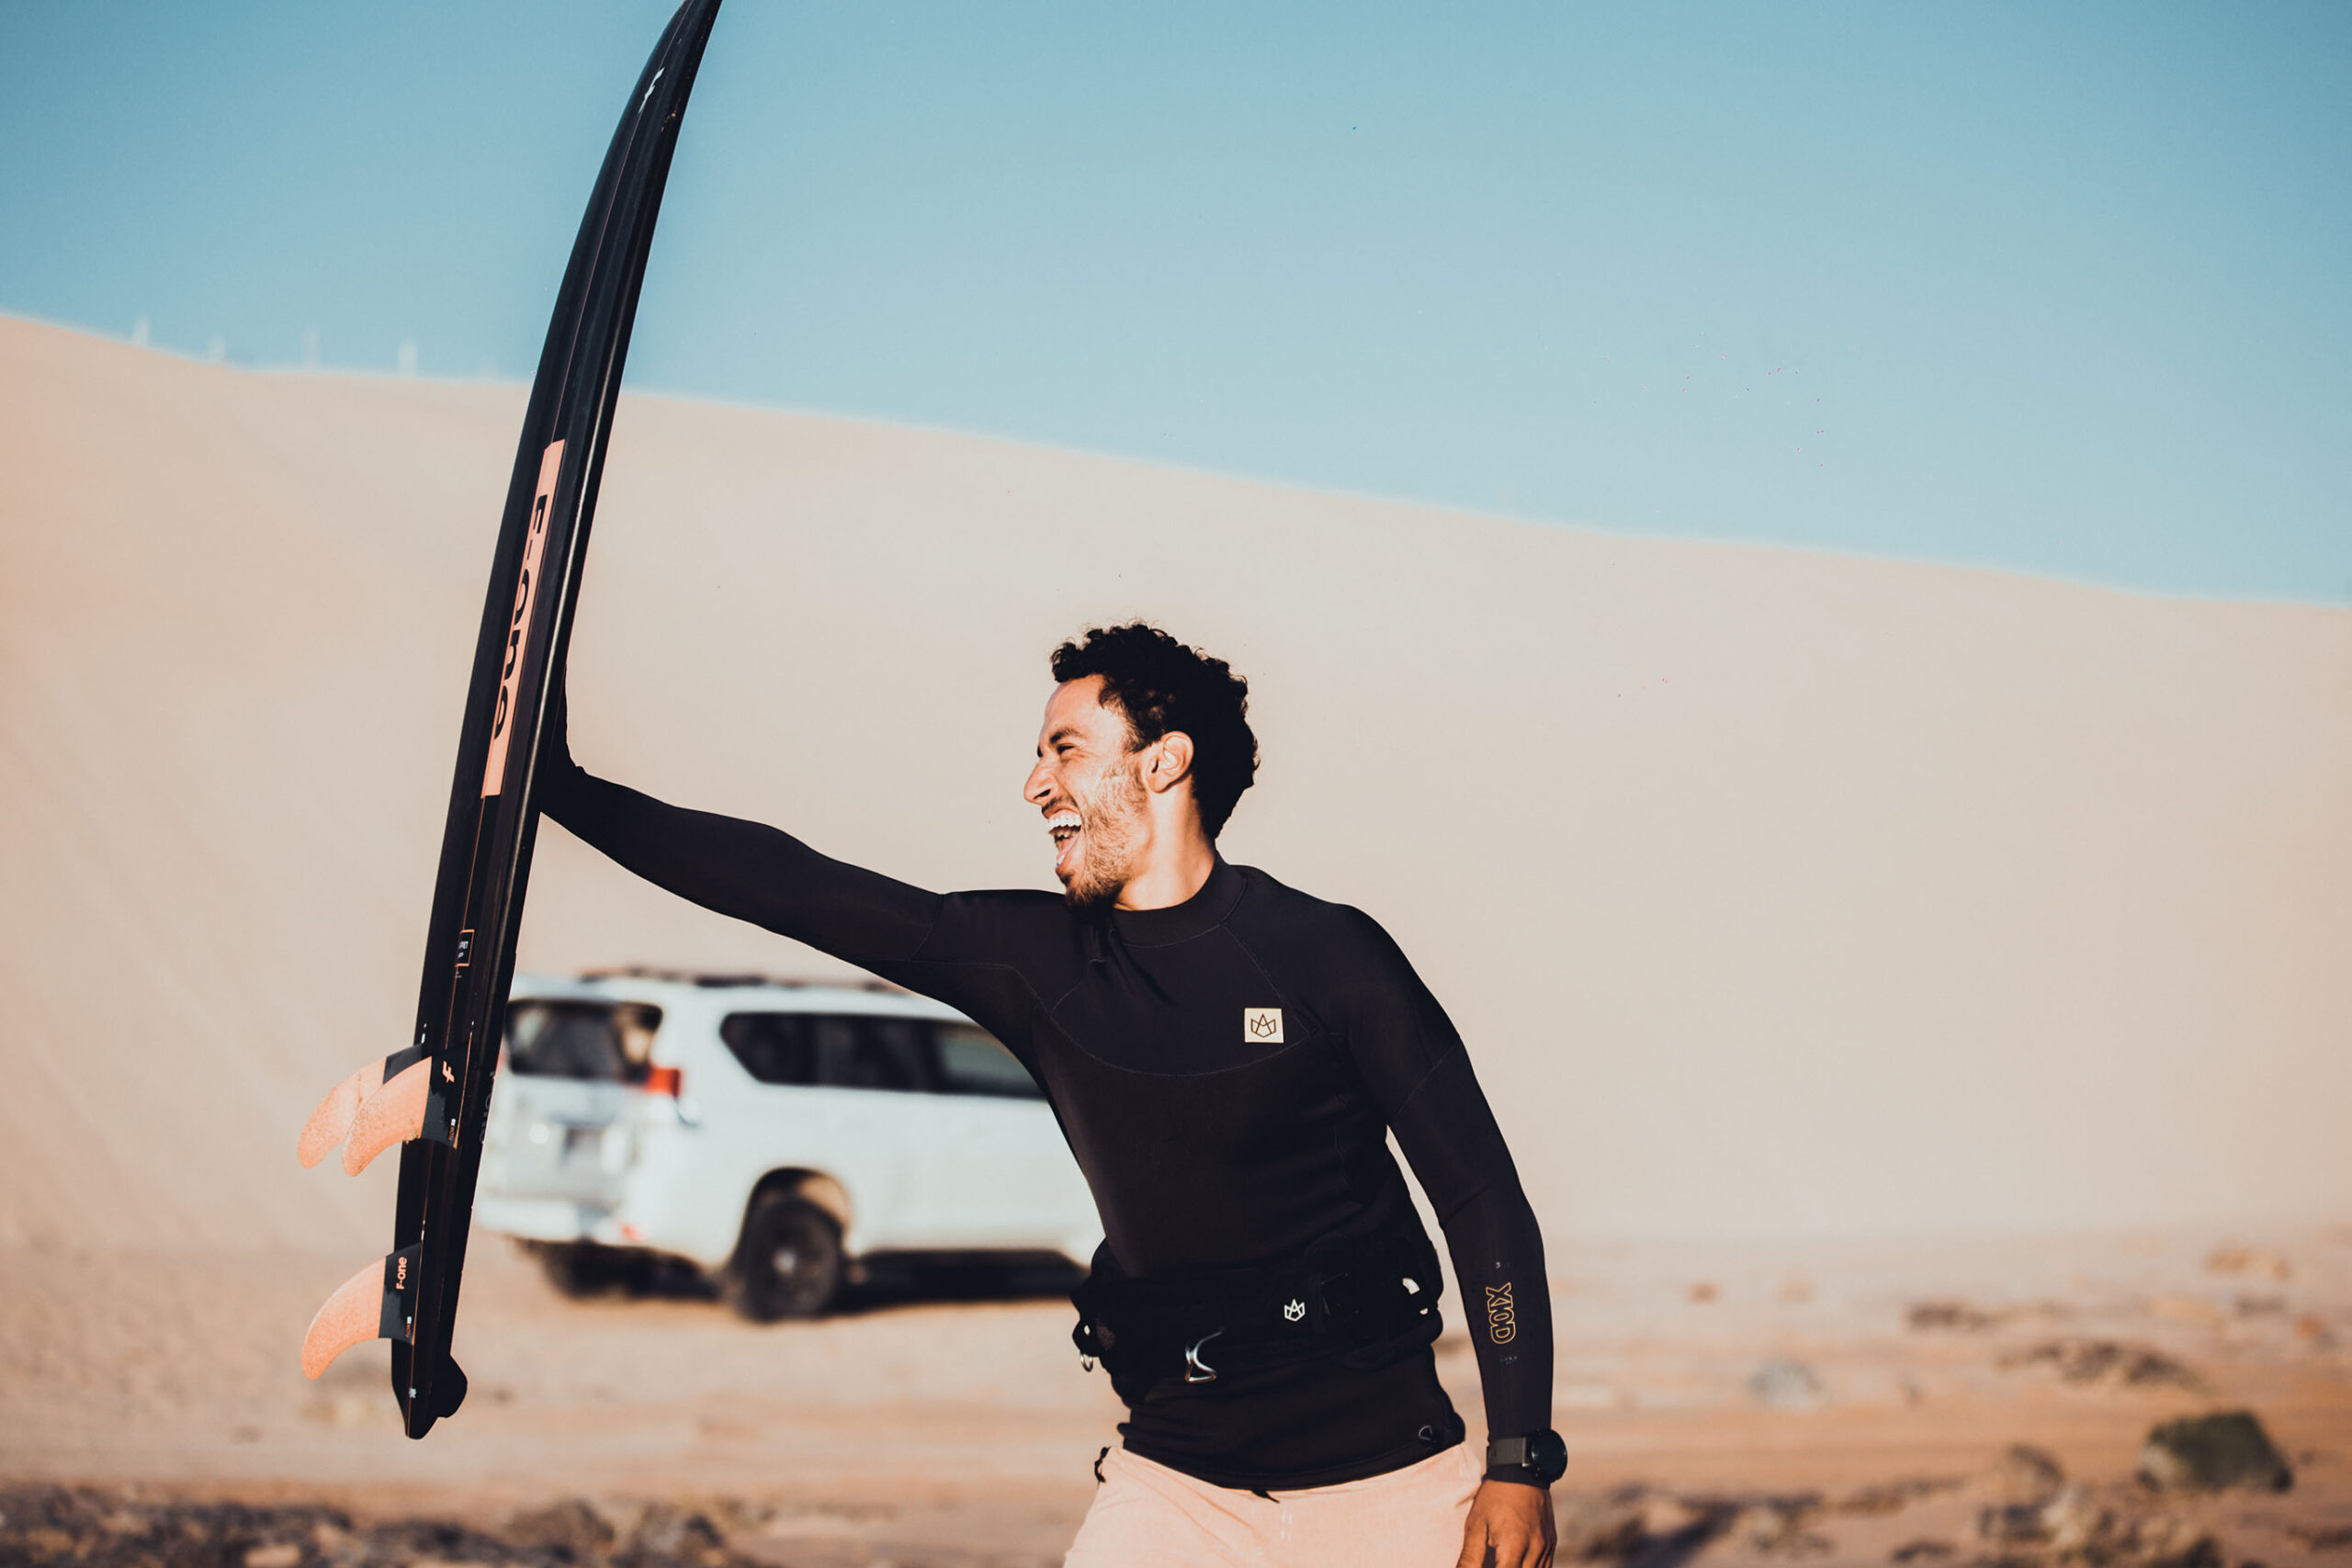 Mogasurf Owner Ismail Adarzane holding F-One Kitesurf board in dunes of Essaouira